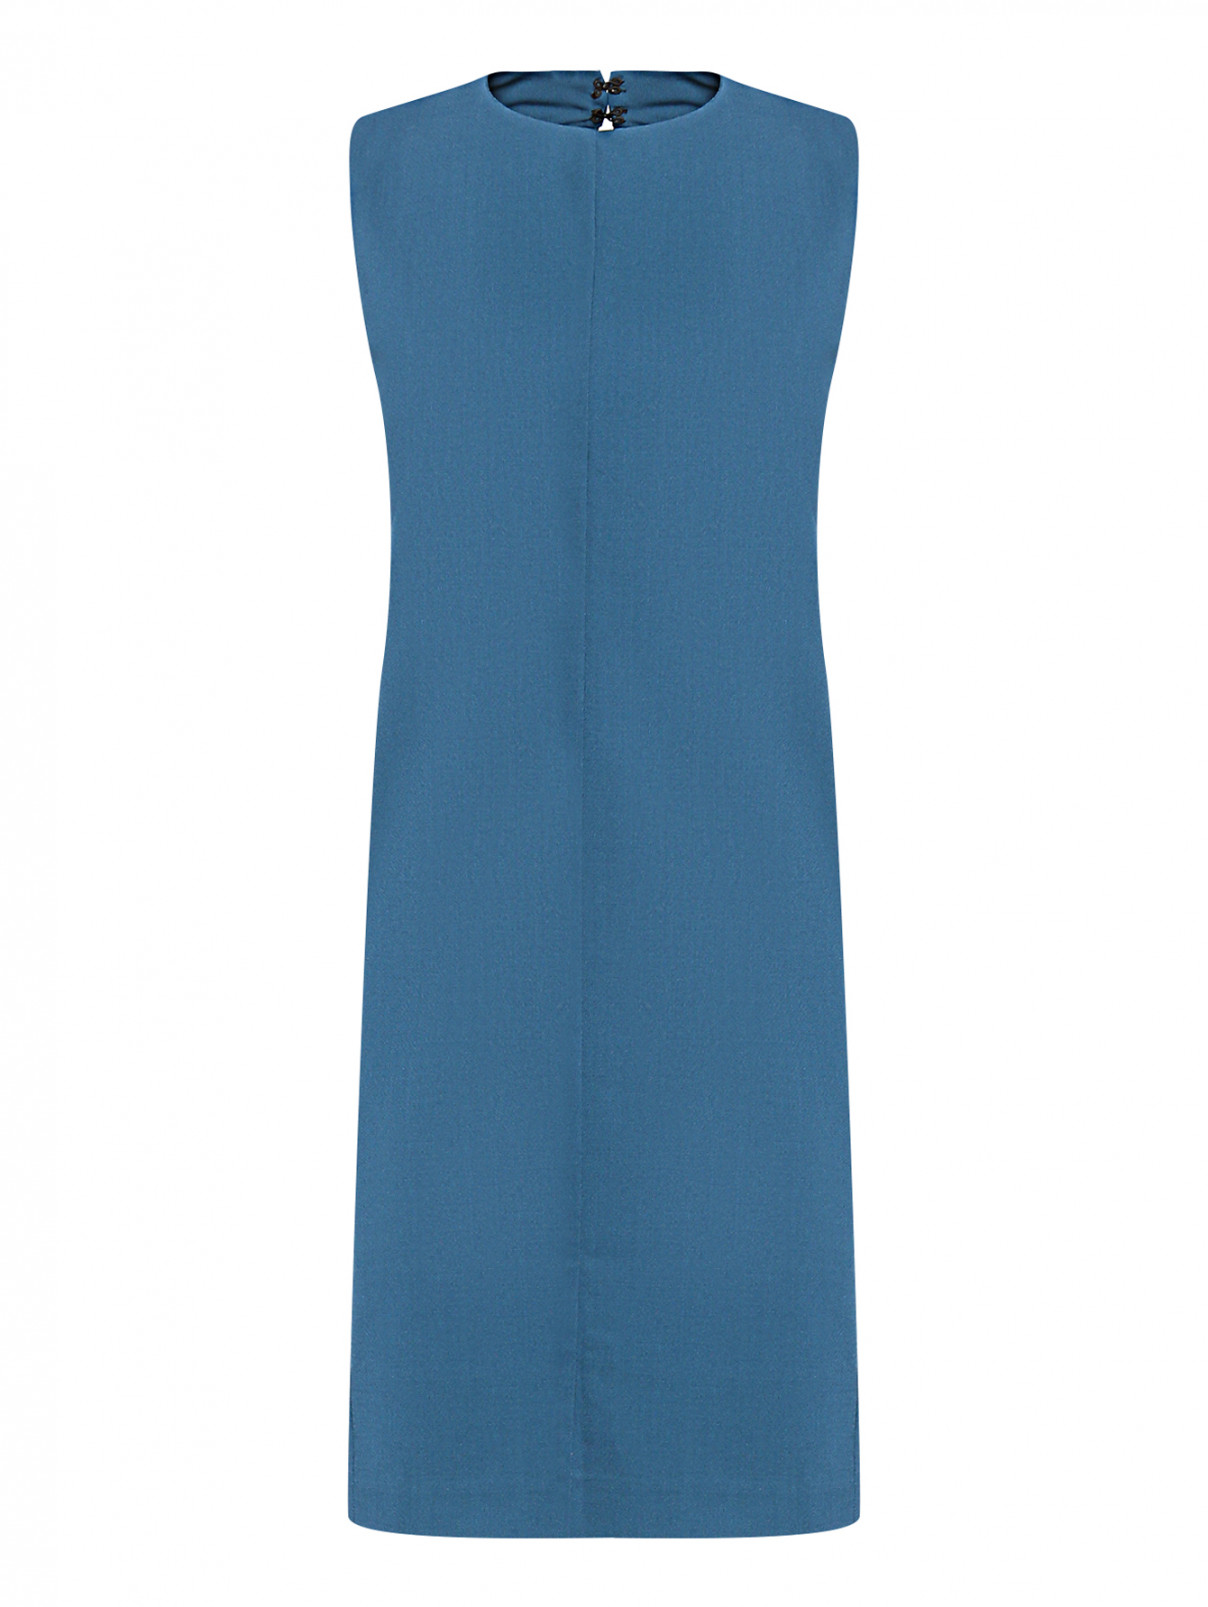 Платье прямого кроя без рукавов Brian Dales  –  Общий вид  – Цвет:  Синий